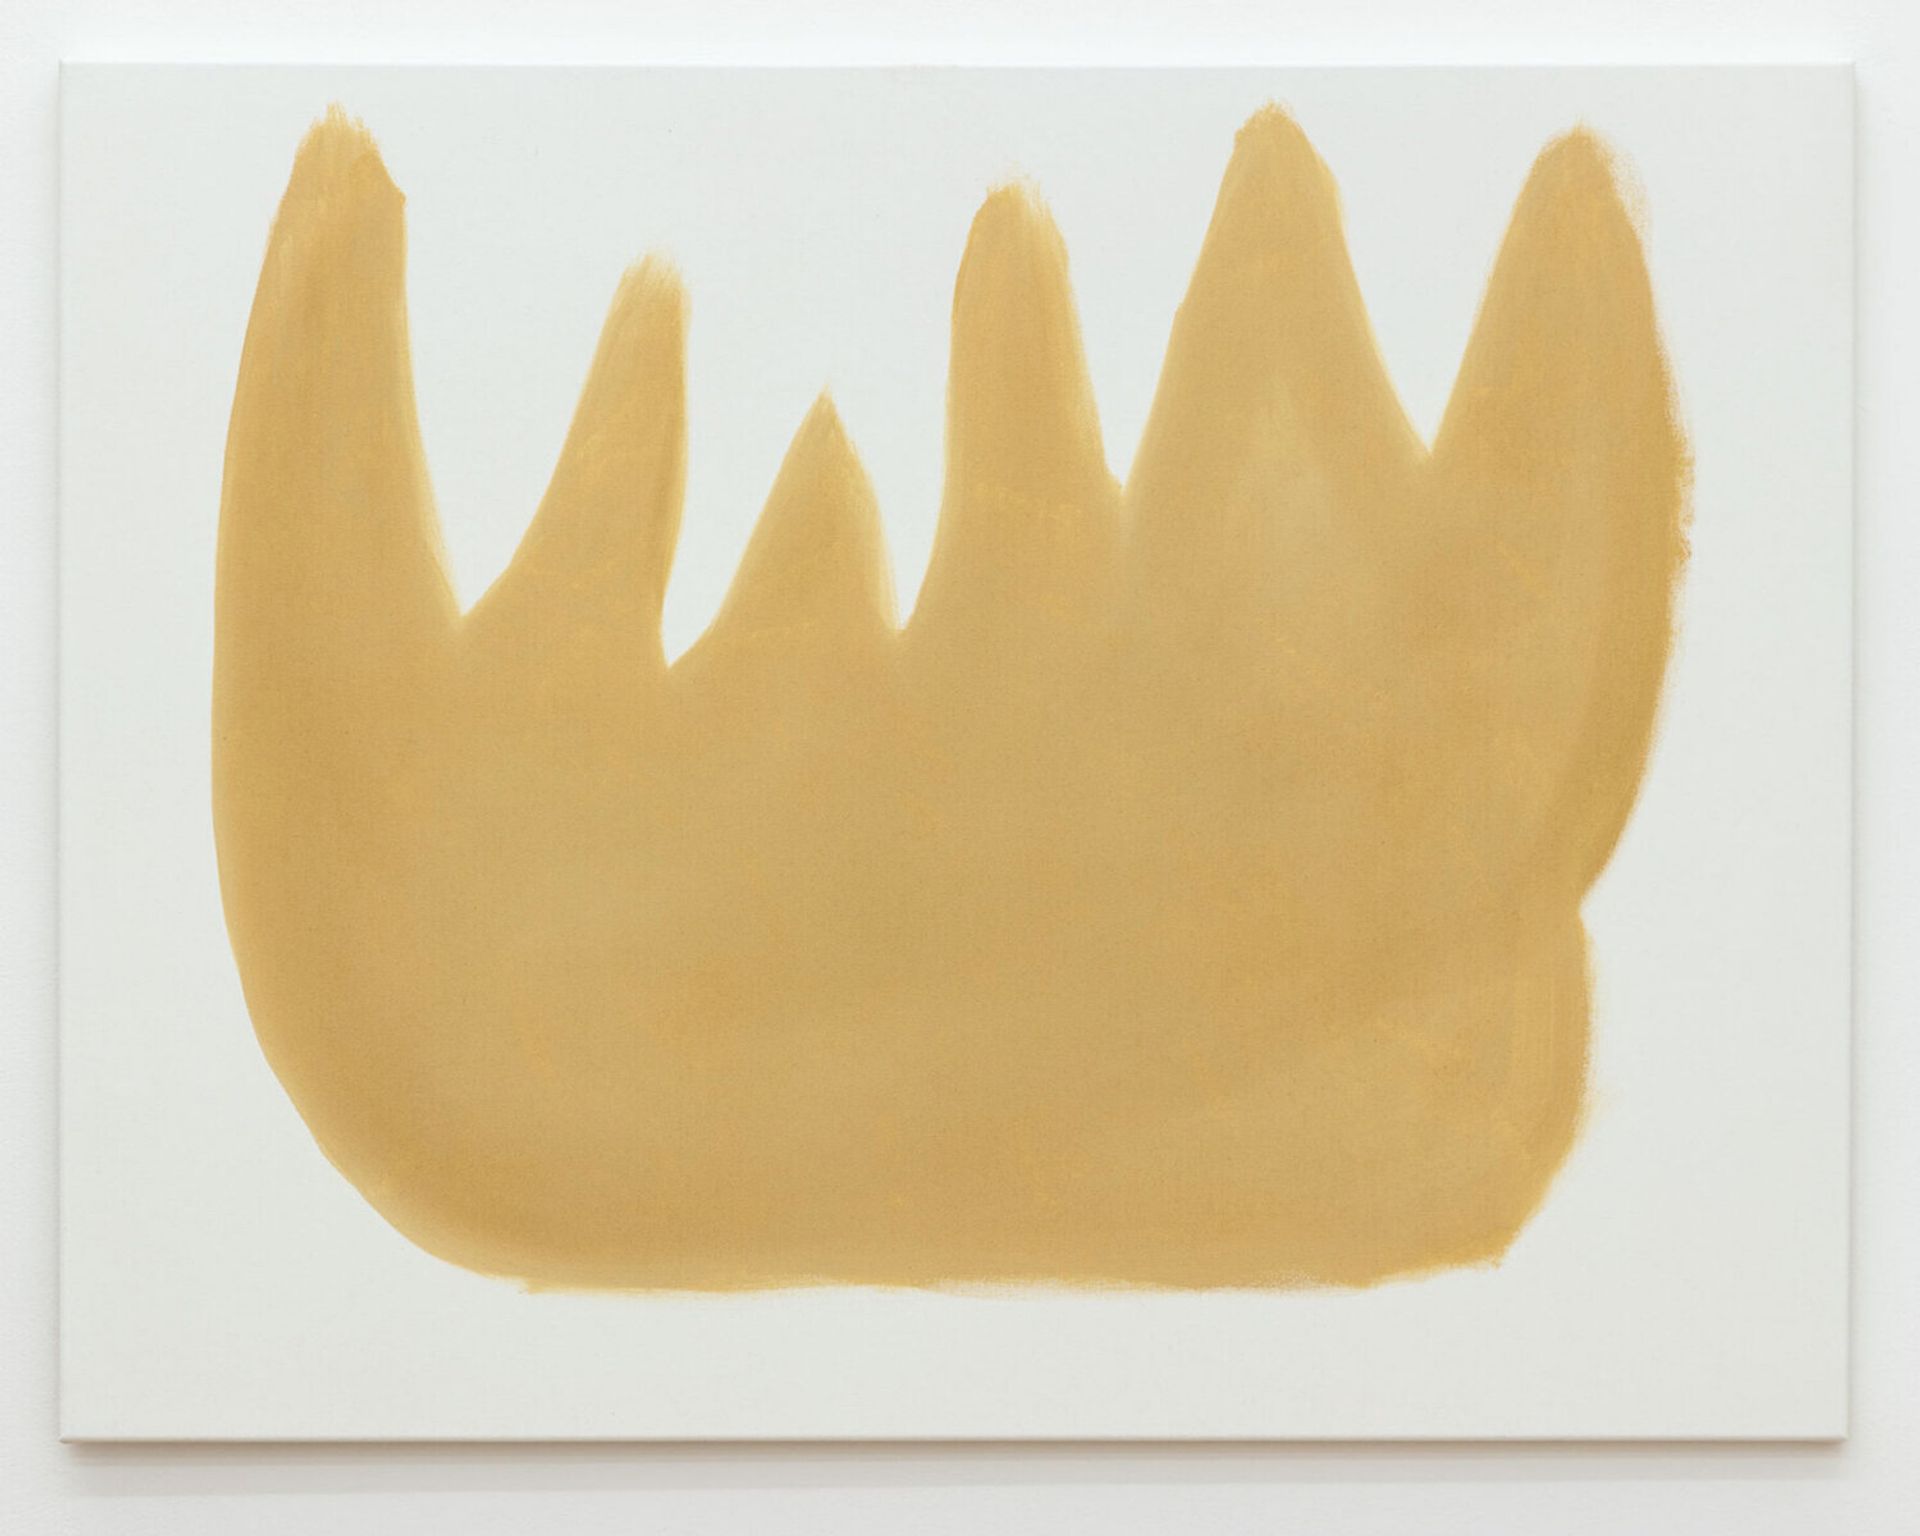 Malte Zenses, Feuer #3, 2020, lacquer and tempera on canvas, 100 × 130 cm